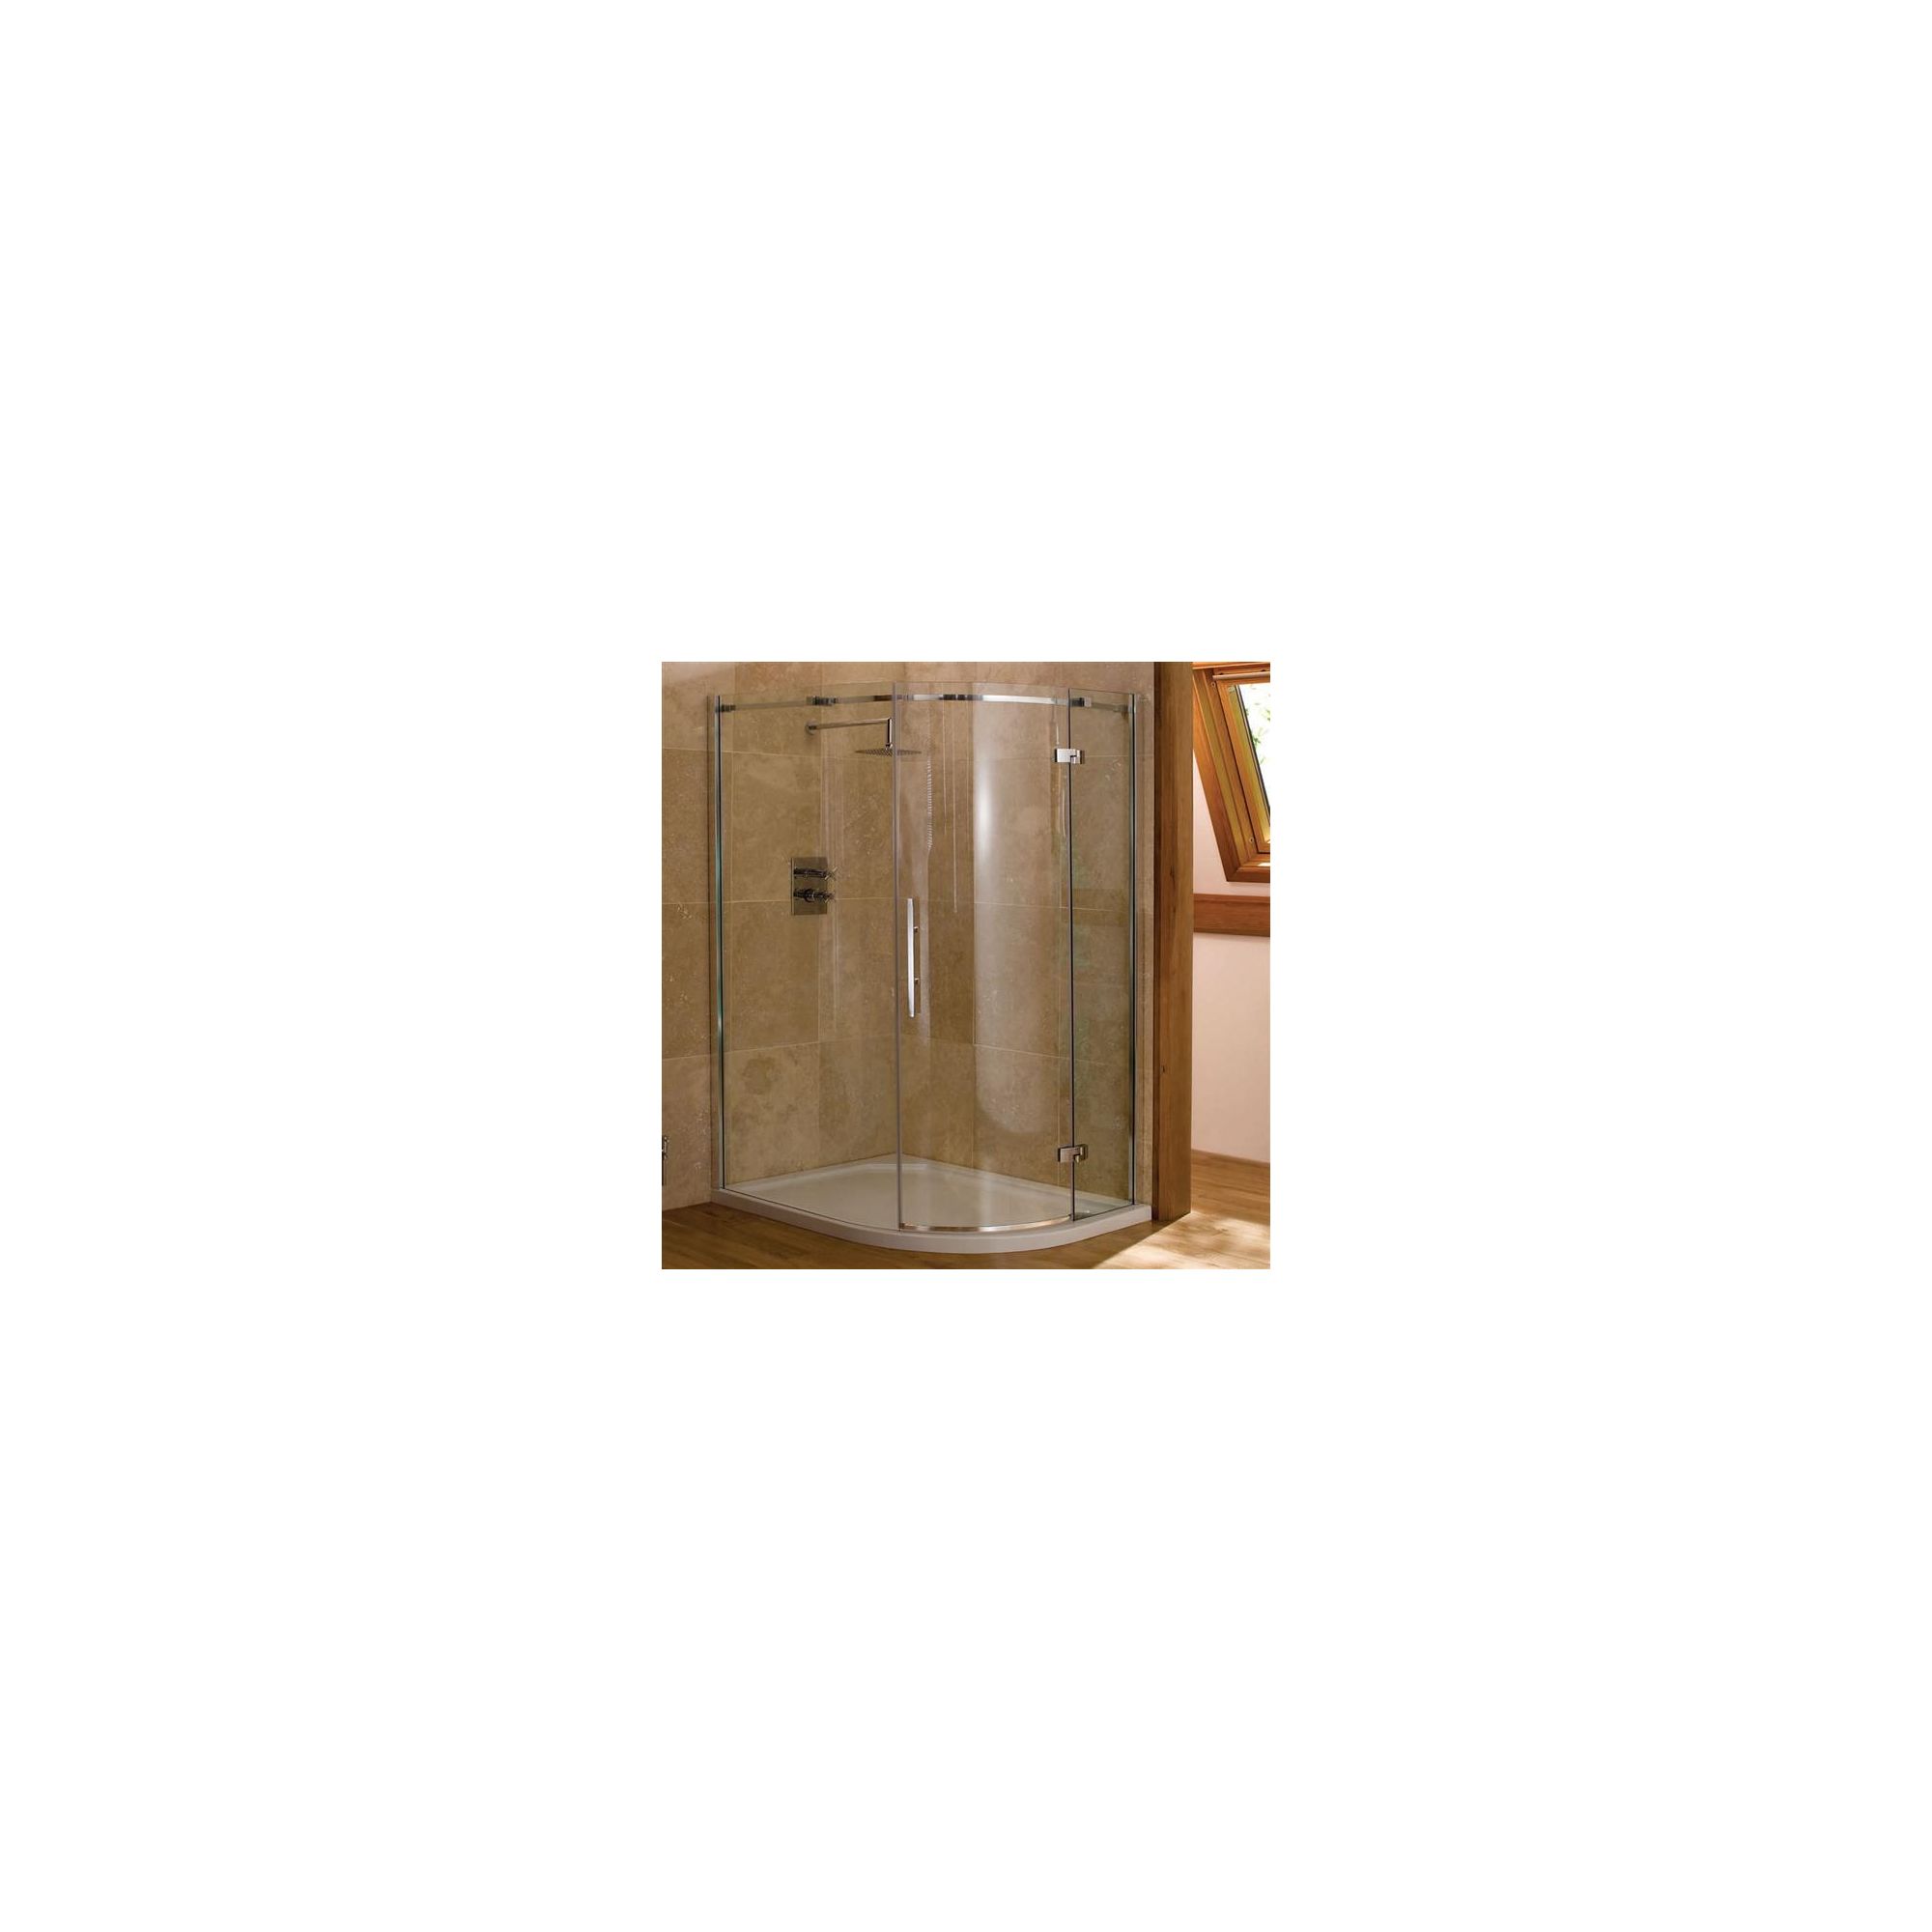 Merlyn Vivid Nine Offset Quadrant Shower Door, 1000mm x 800mm, Left Handed, 8mm Glass at Tesco Direct